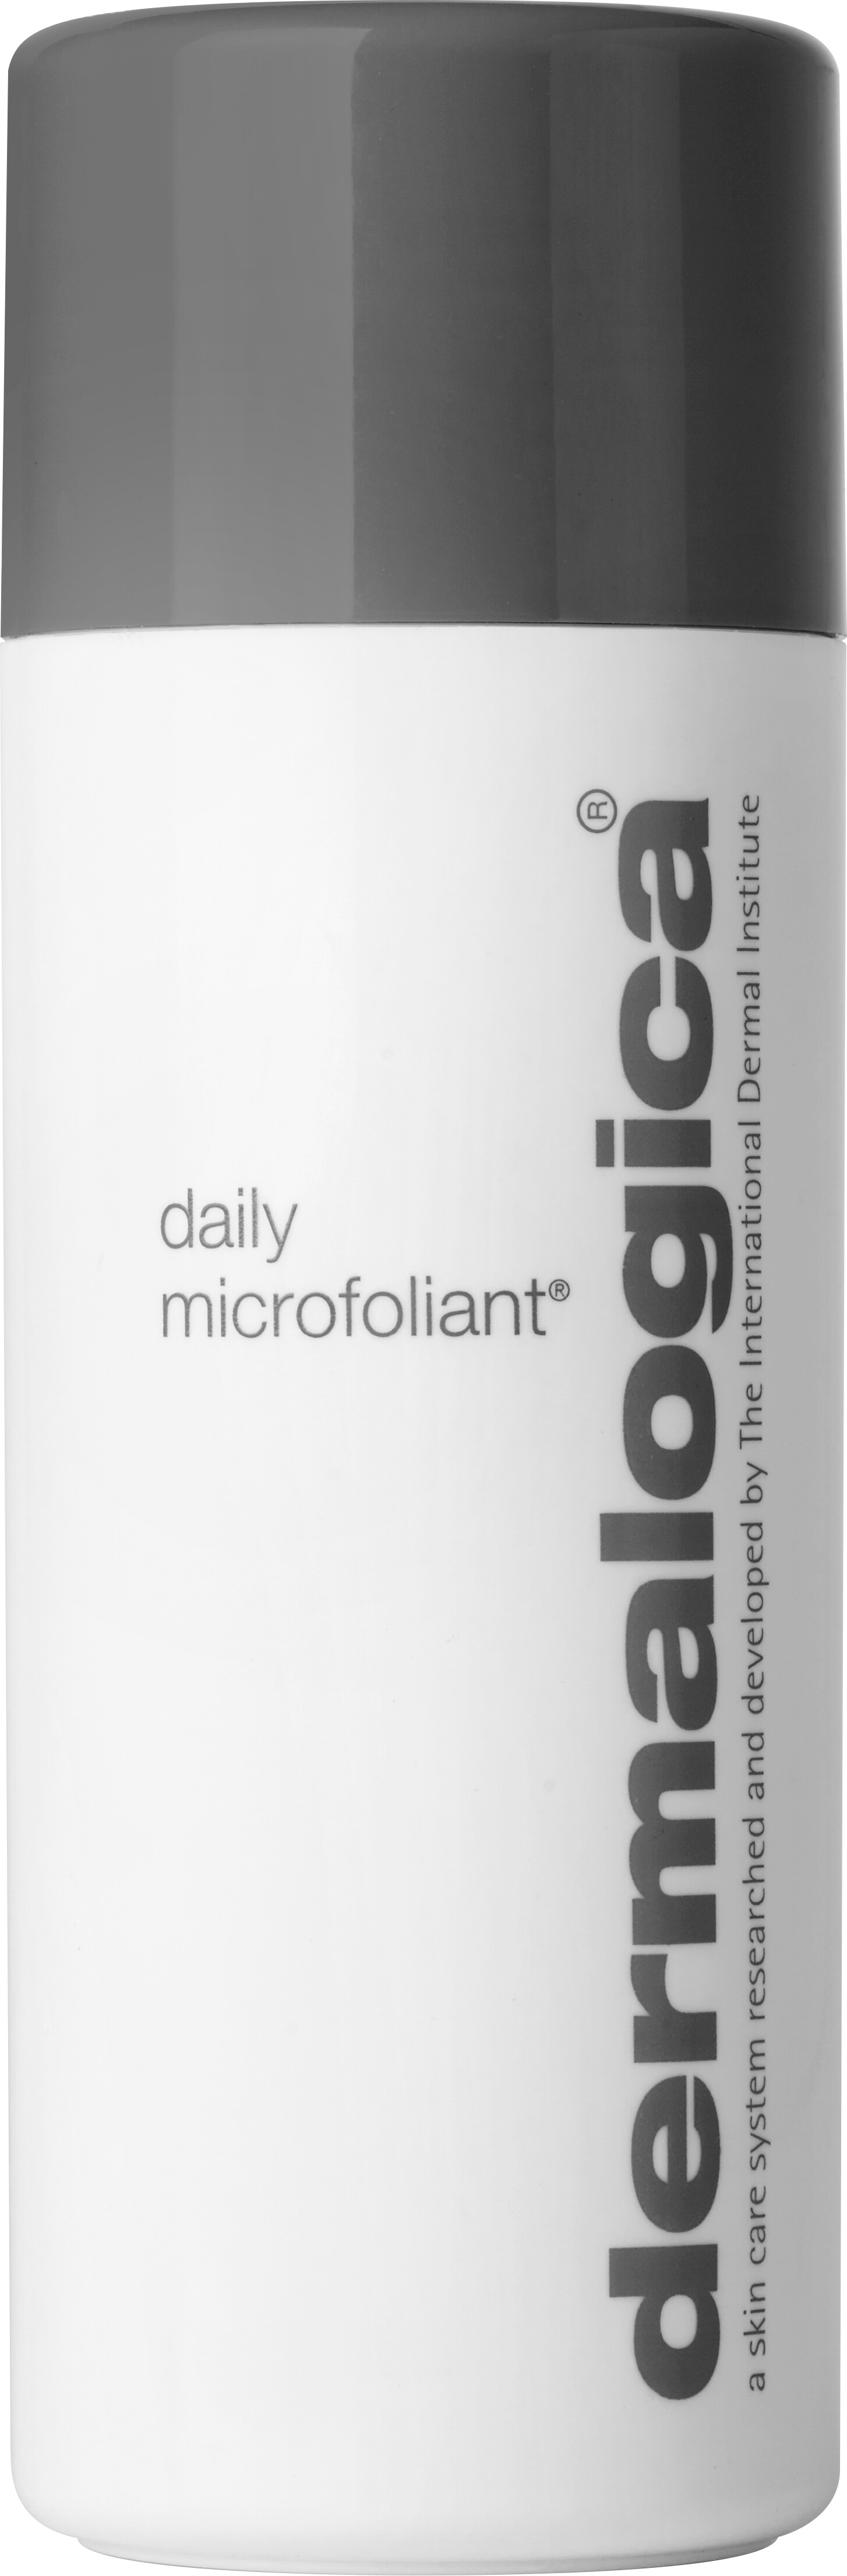 Dermalogica Daily Microfoliant 74g